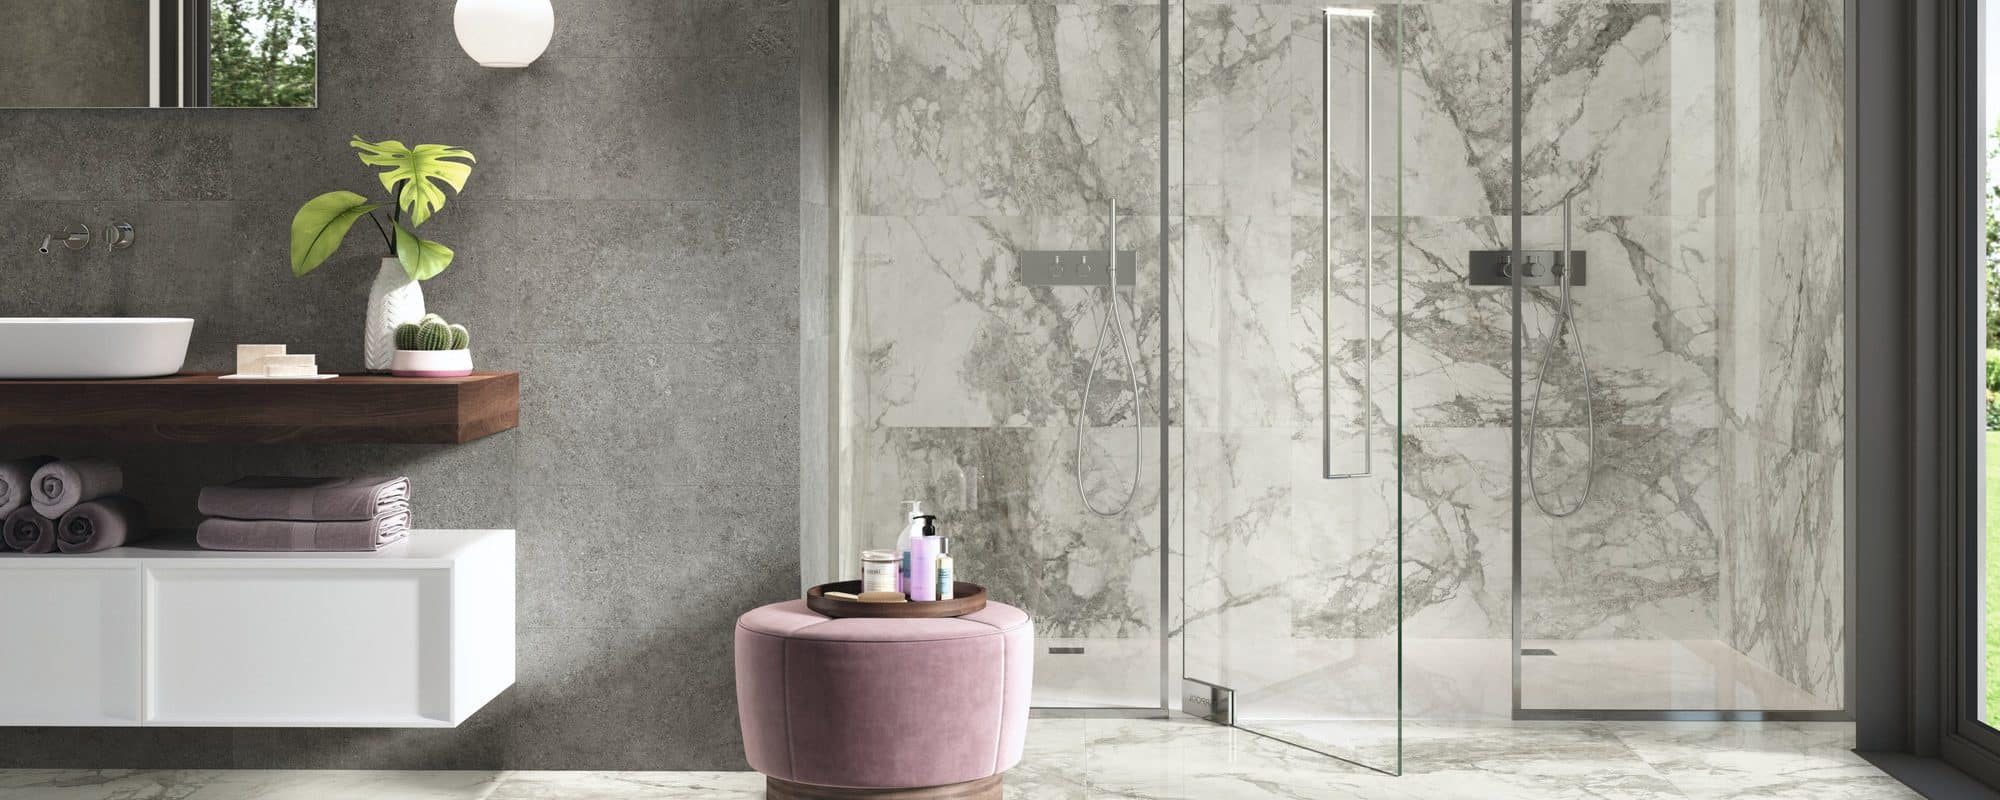 WABI SABI cement effect porcelain bathroom tiles uk slider 2